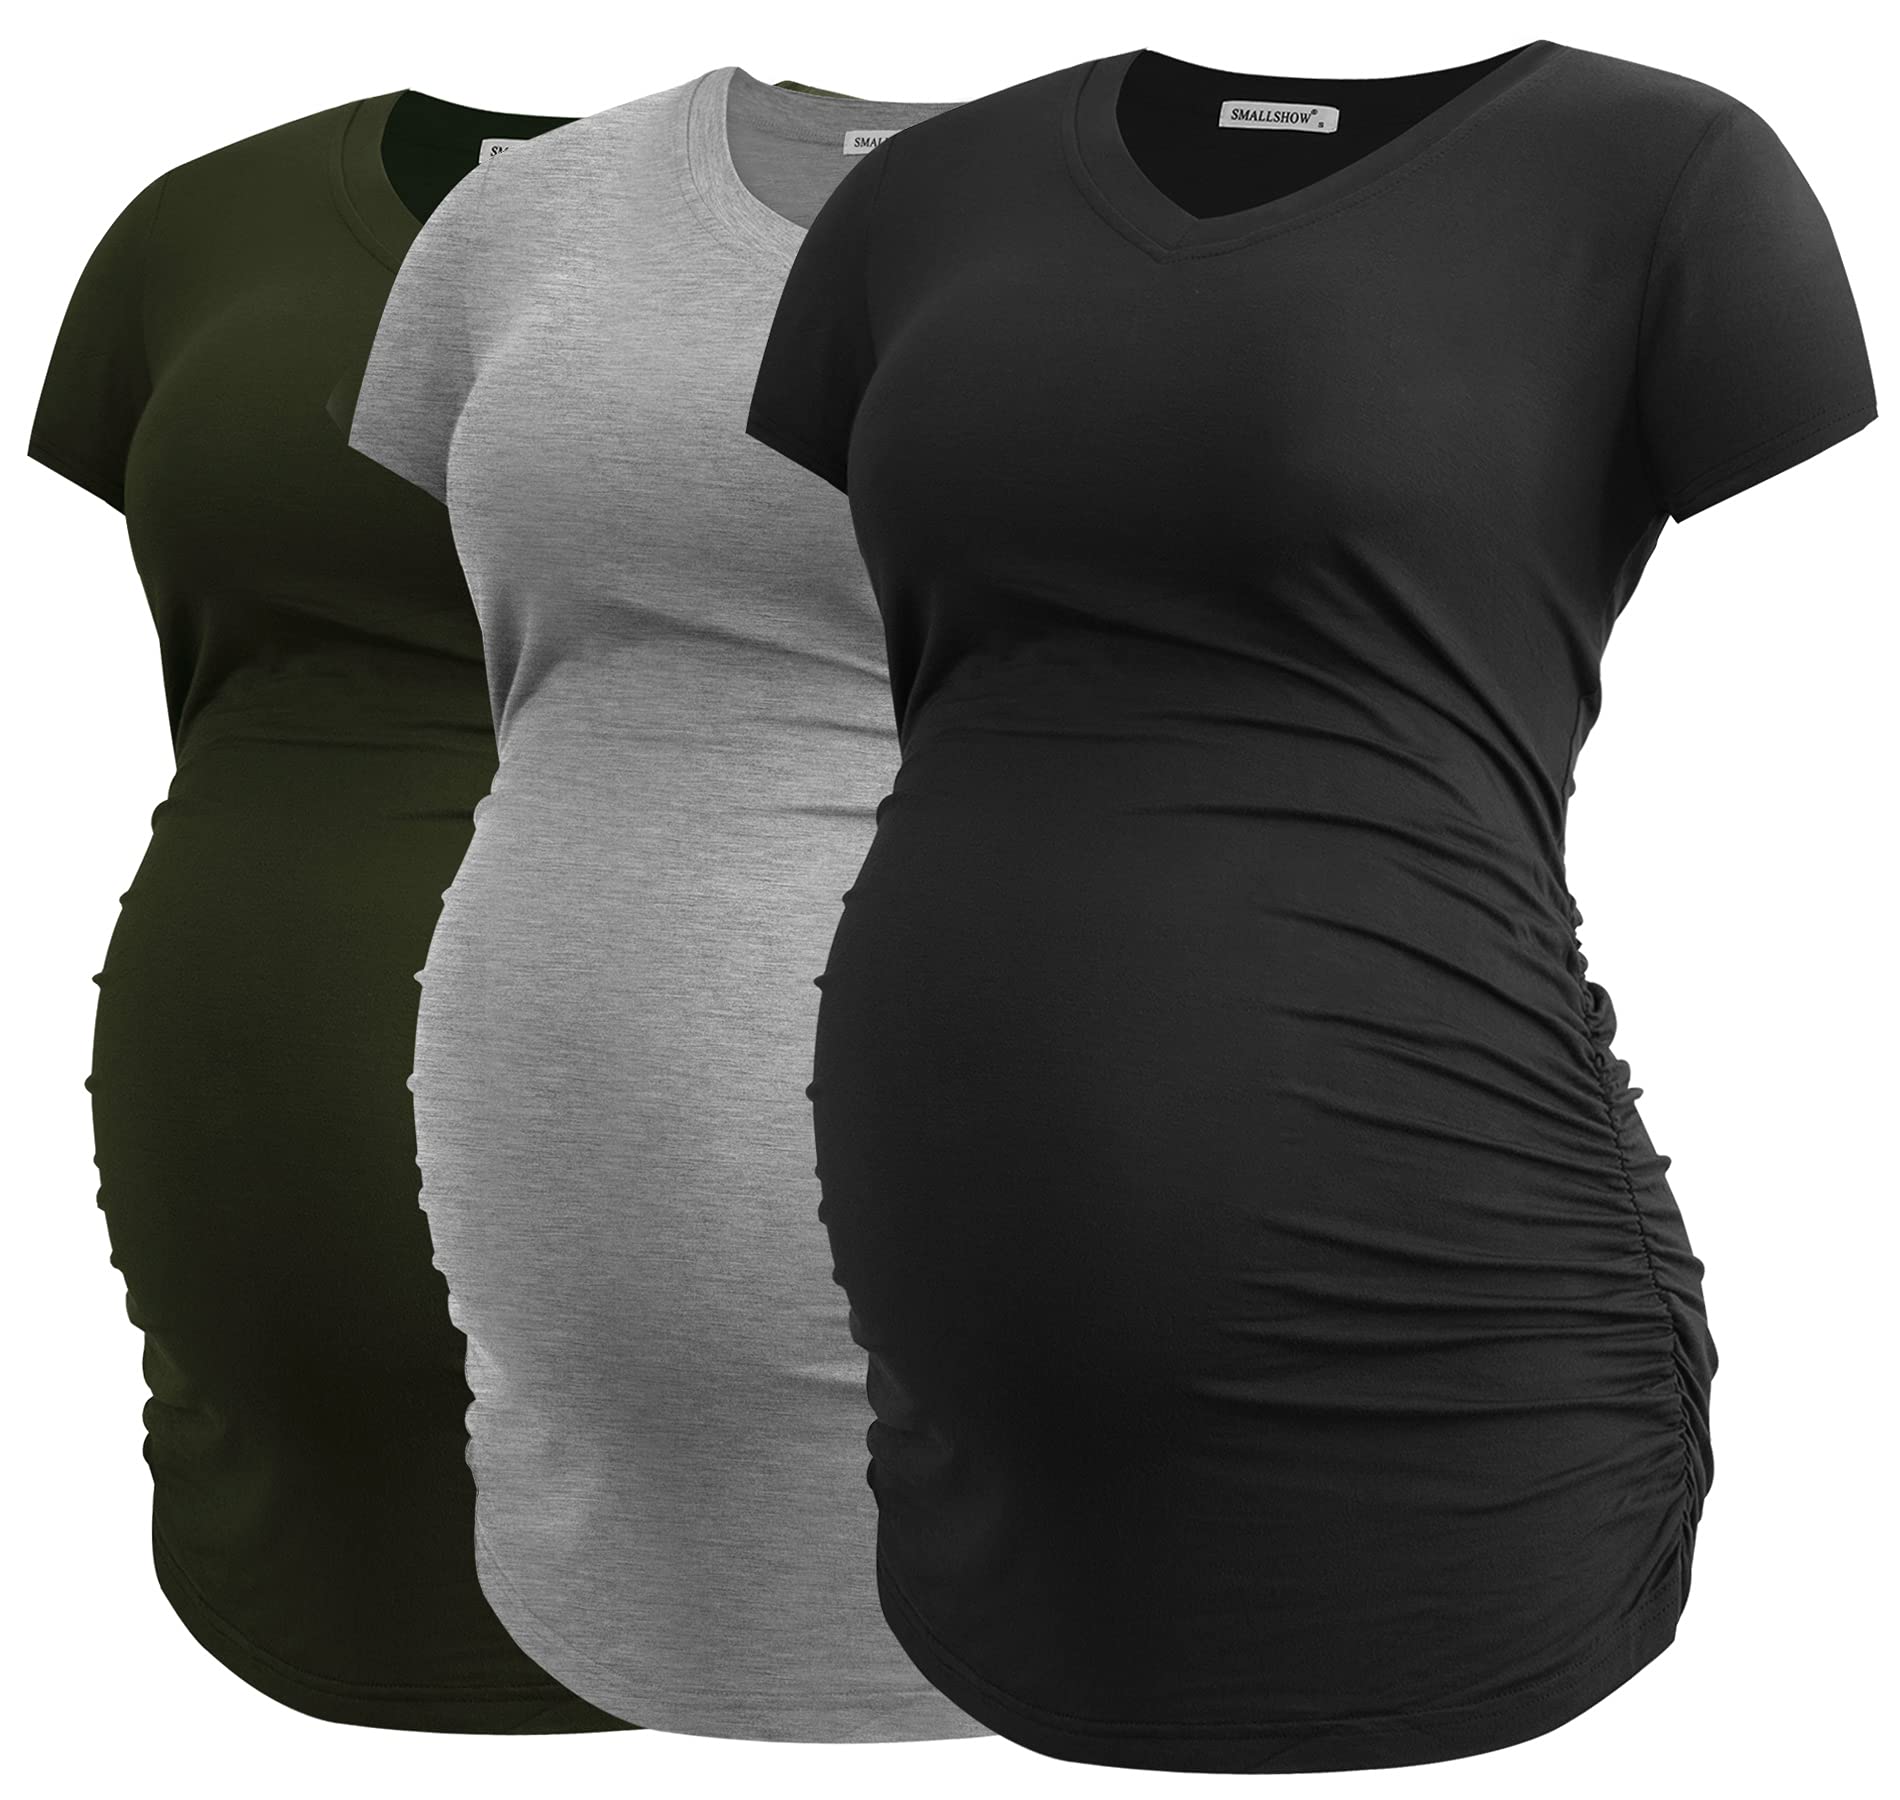 Smallshow Damen Umstandstop V Hals Schwangerschaft Seite Geraffte Umstandskleidung Tops T Shirt 3 Pack,Army Green-Black-Light Grey,2XL